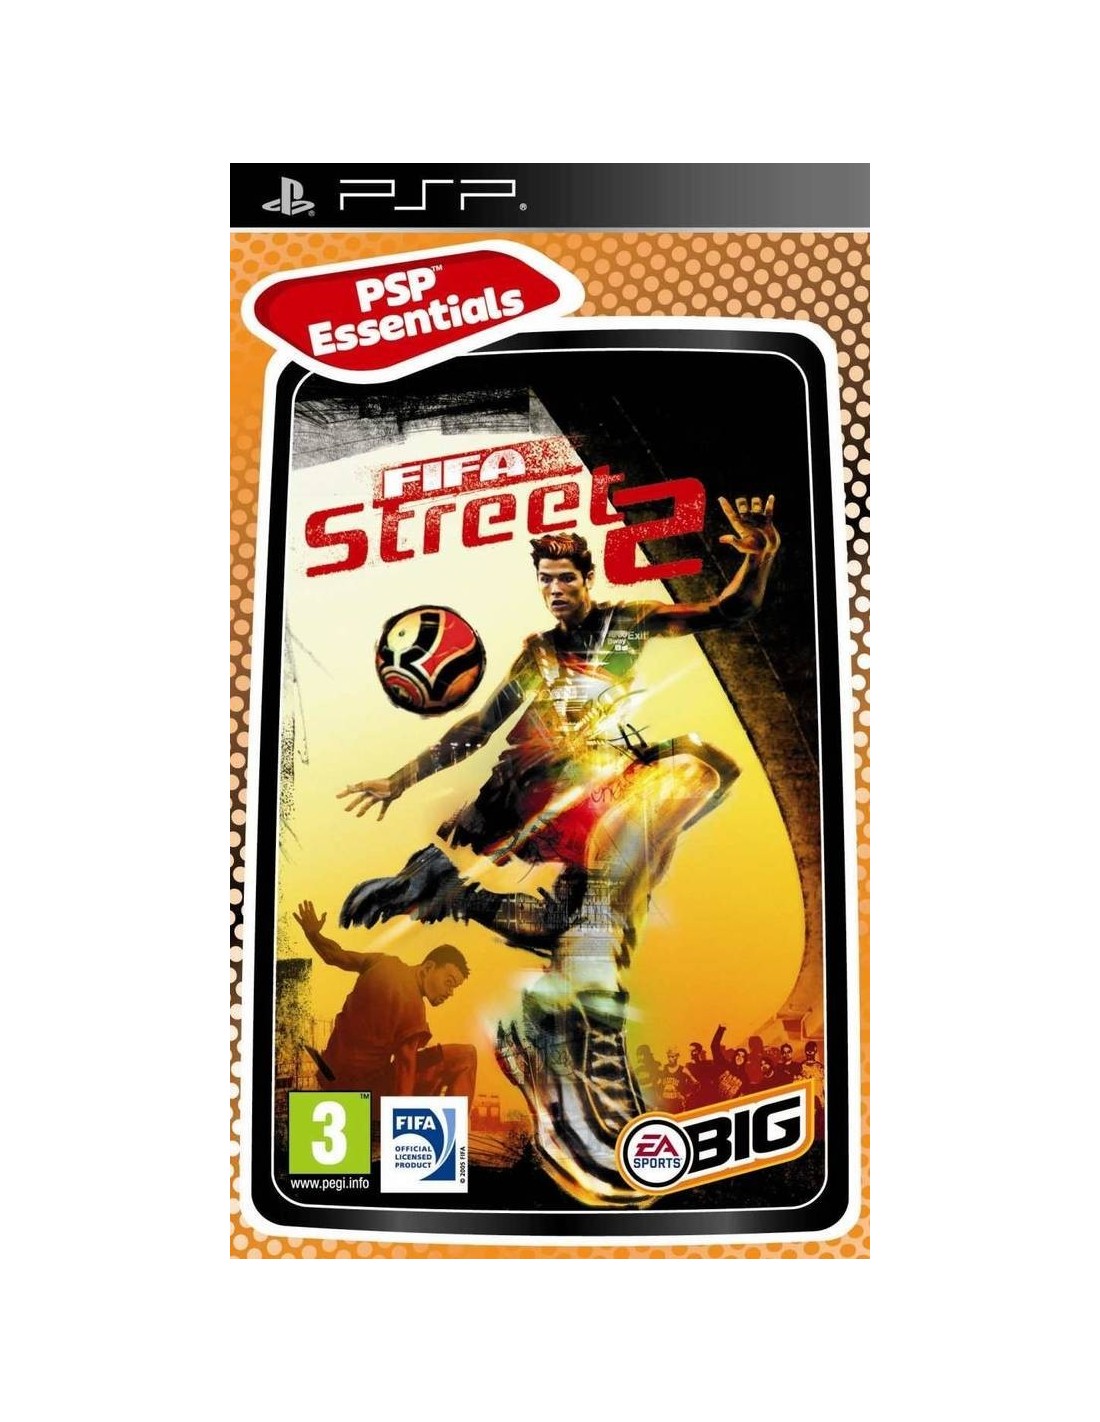 FIFA Street 2 para PSP (2006)